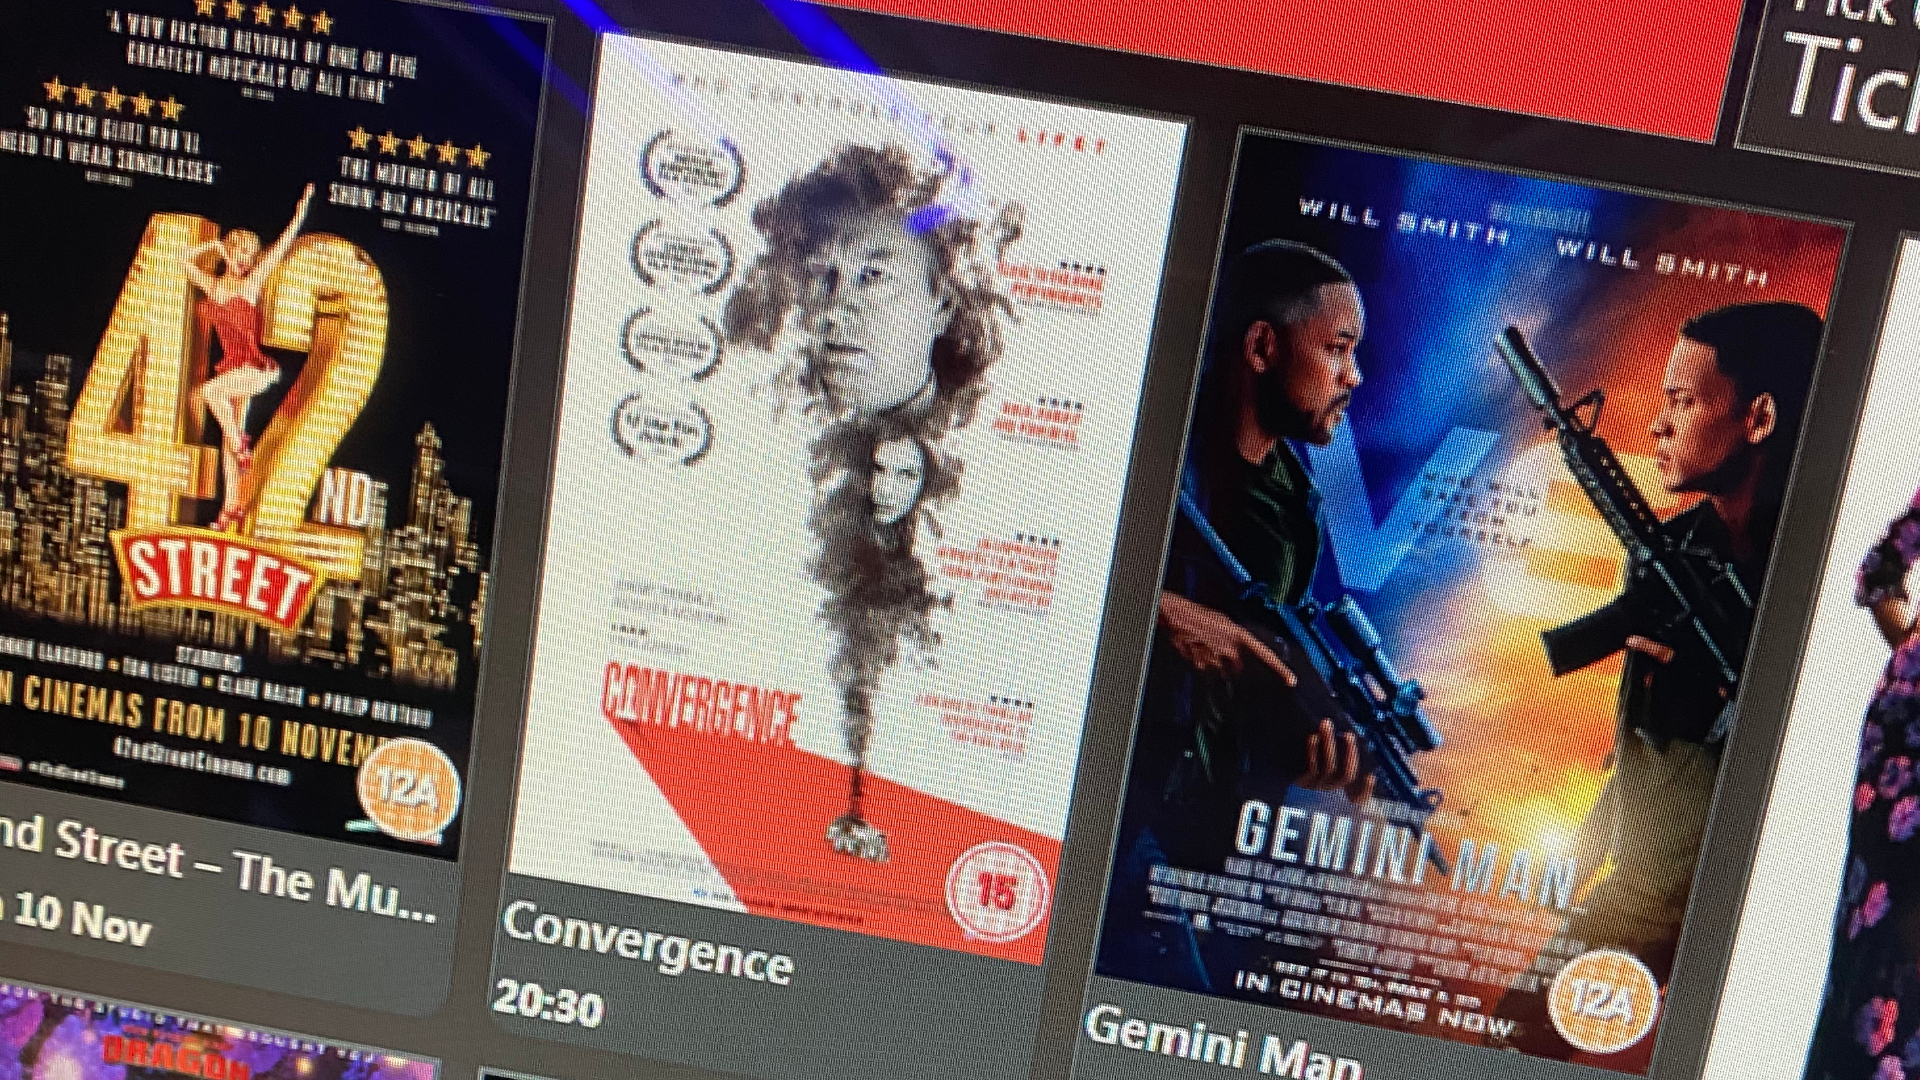 Convergence Cinemas